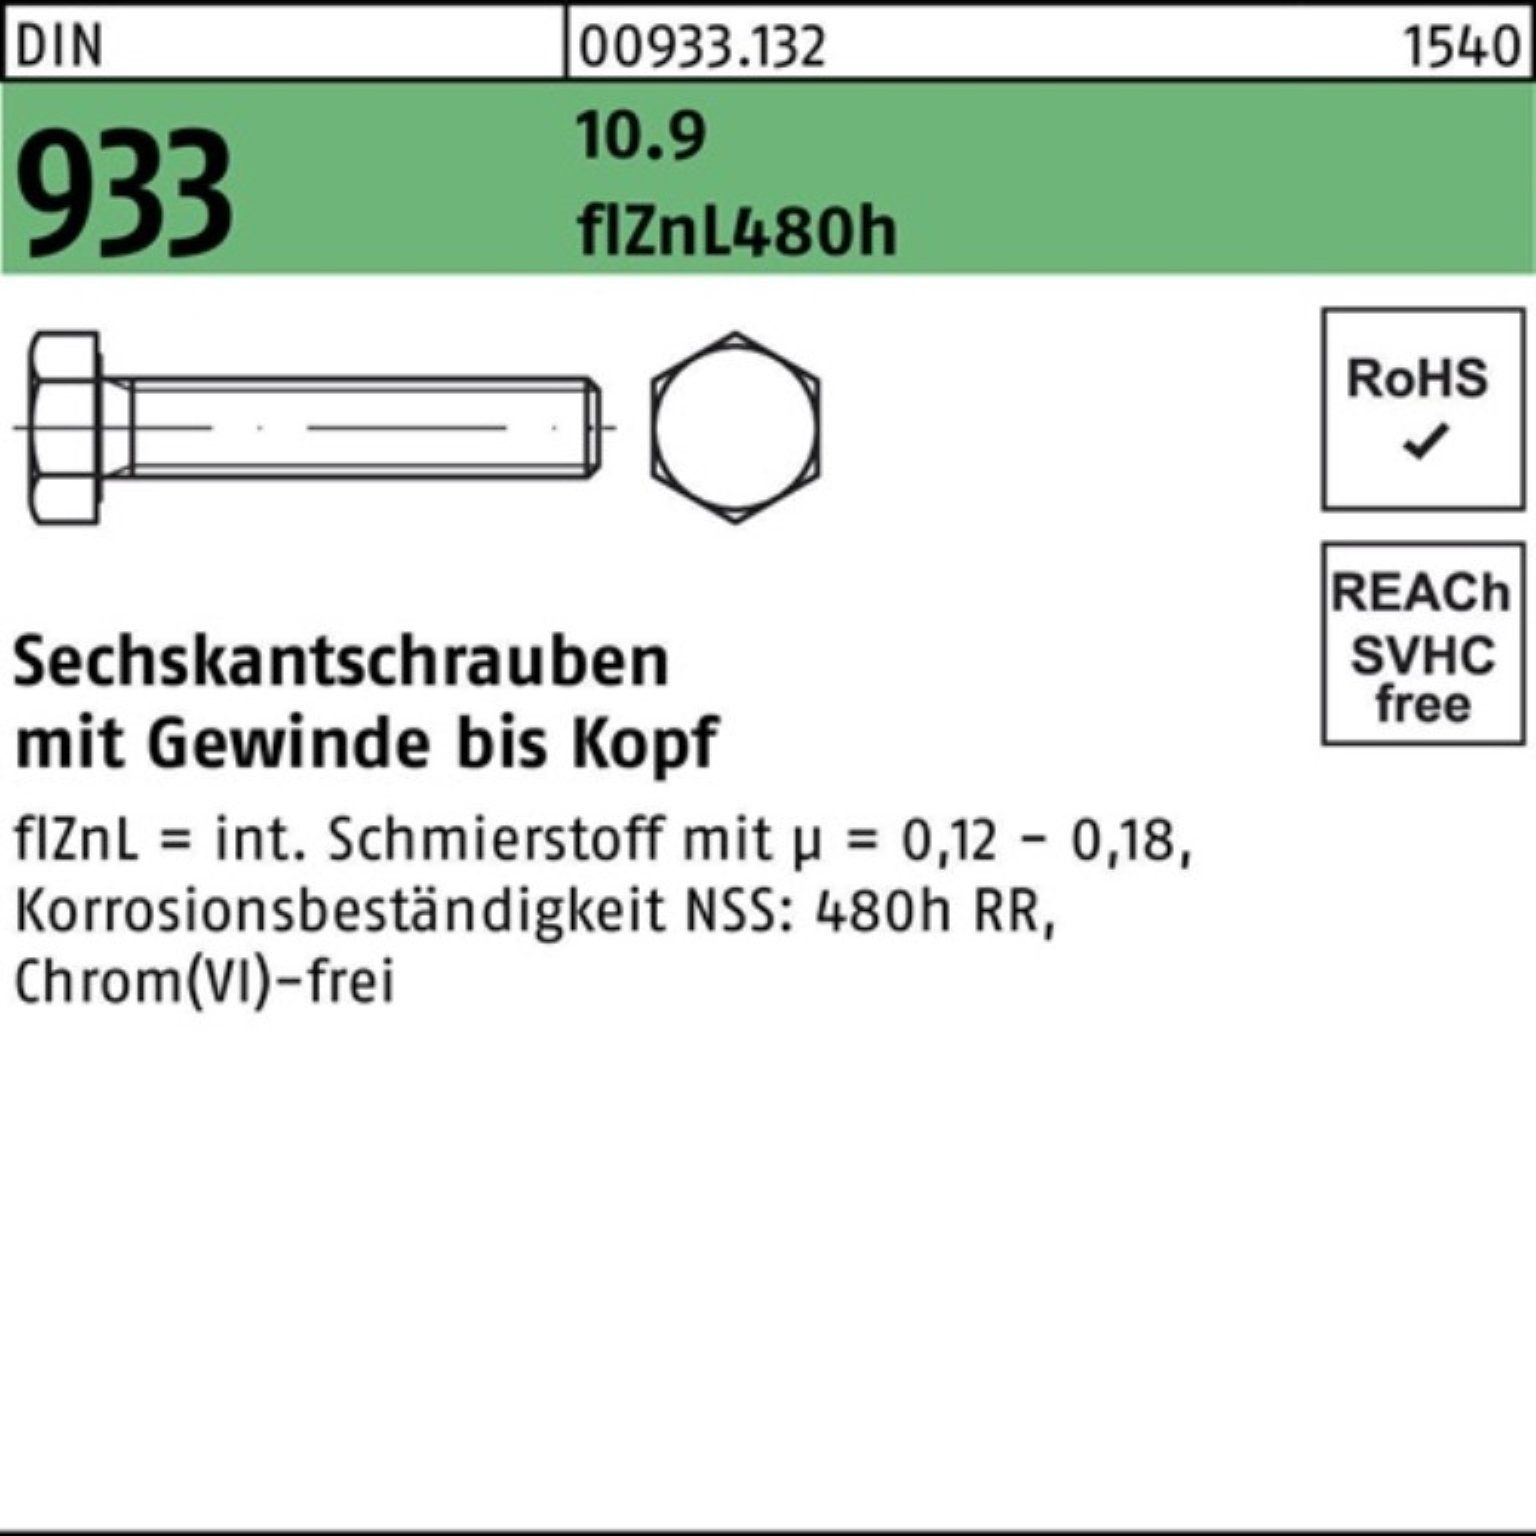 Pack 200er DIN Sechskantschraube 933 Reyher 10.9 VG 50 Sechskantschraube M6x flZnL/nc/x/x/480h